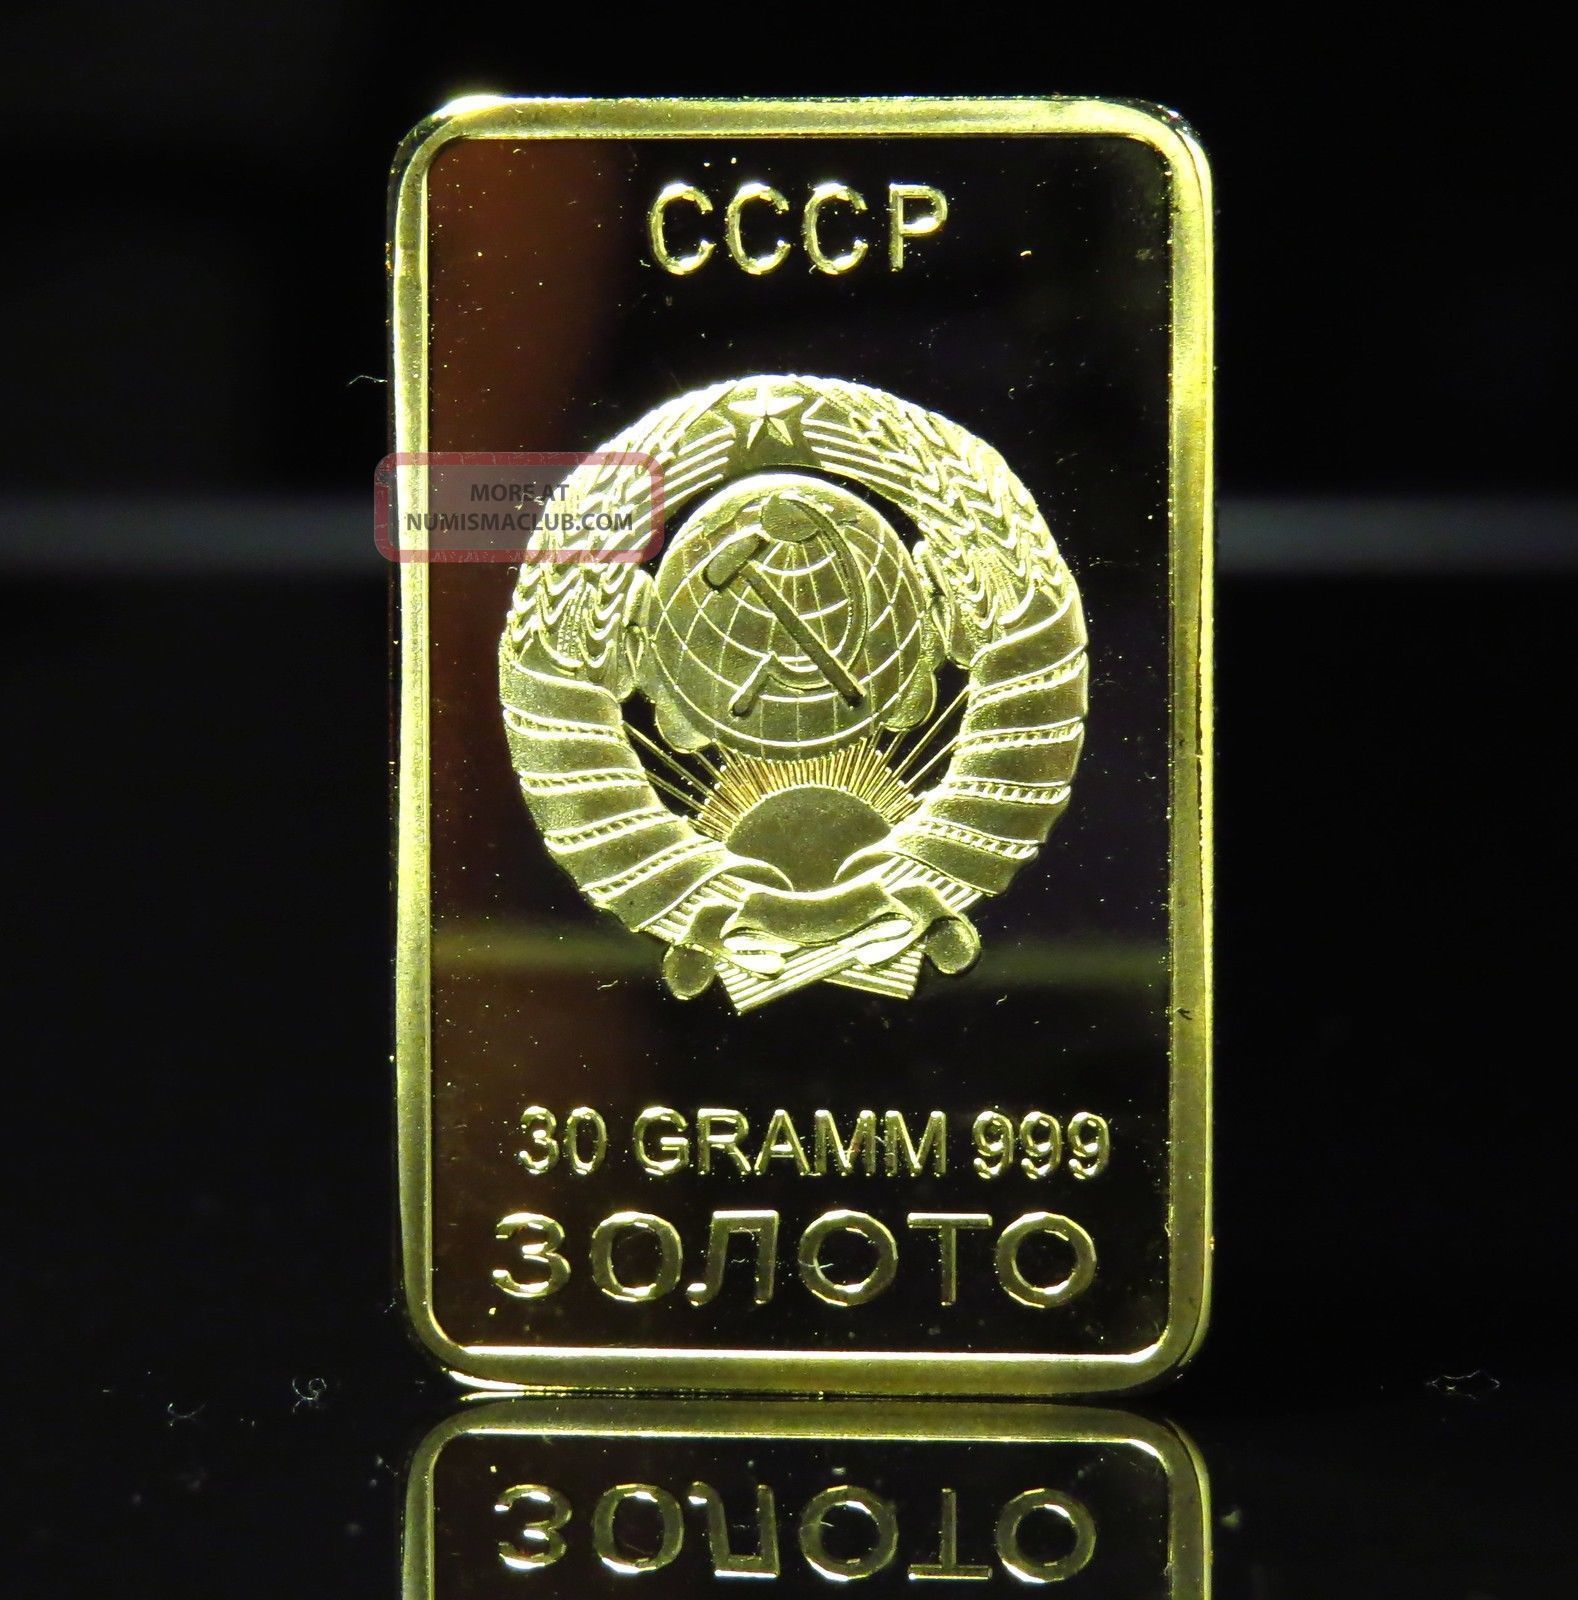 1 Oz Cccp Soviet Russian Pure. 999 24k Gold Clad Bullion Bar Rare